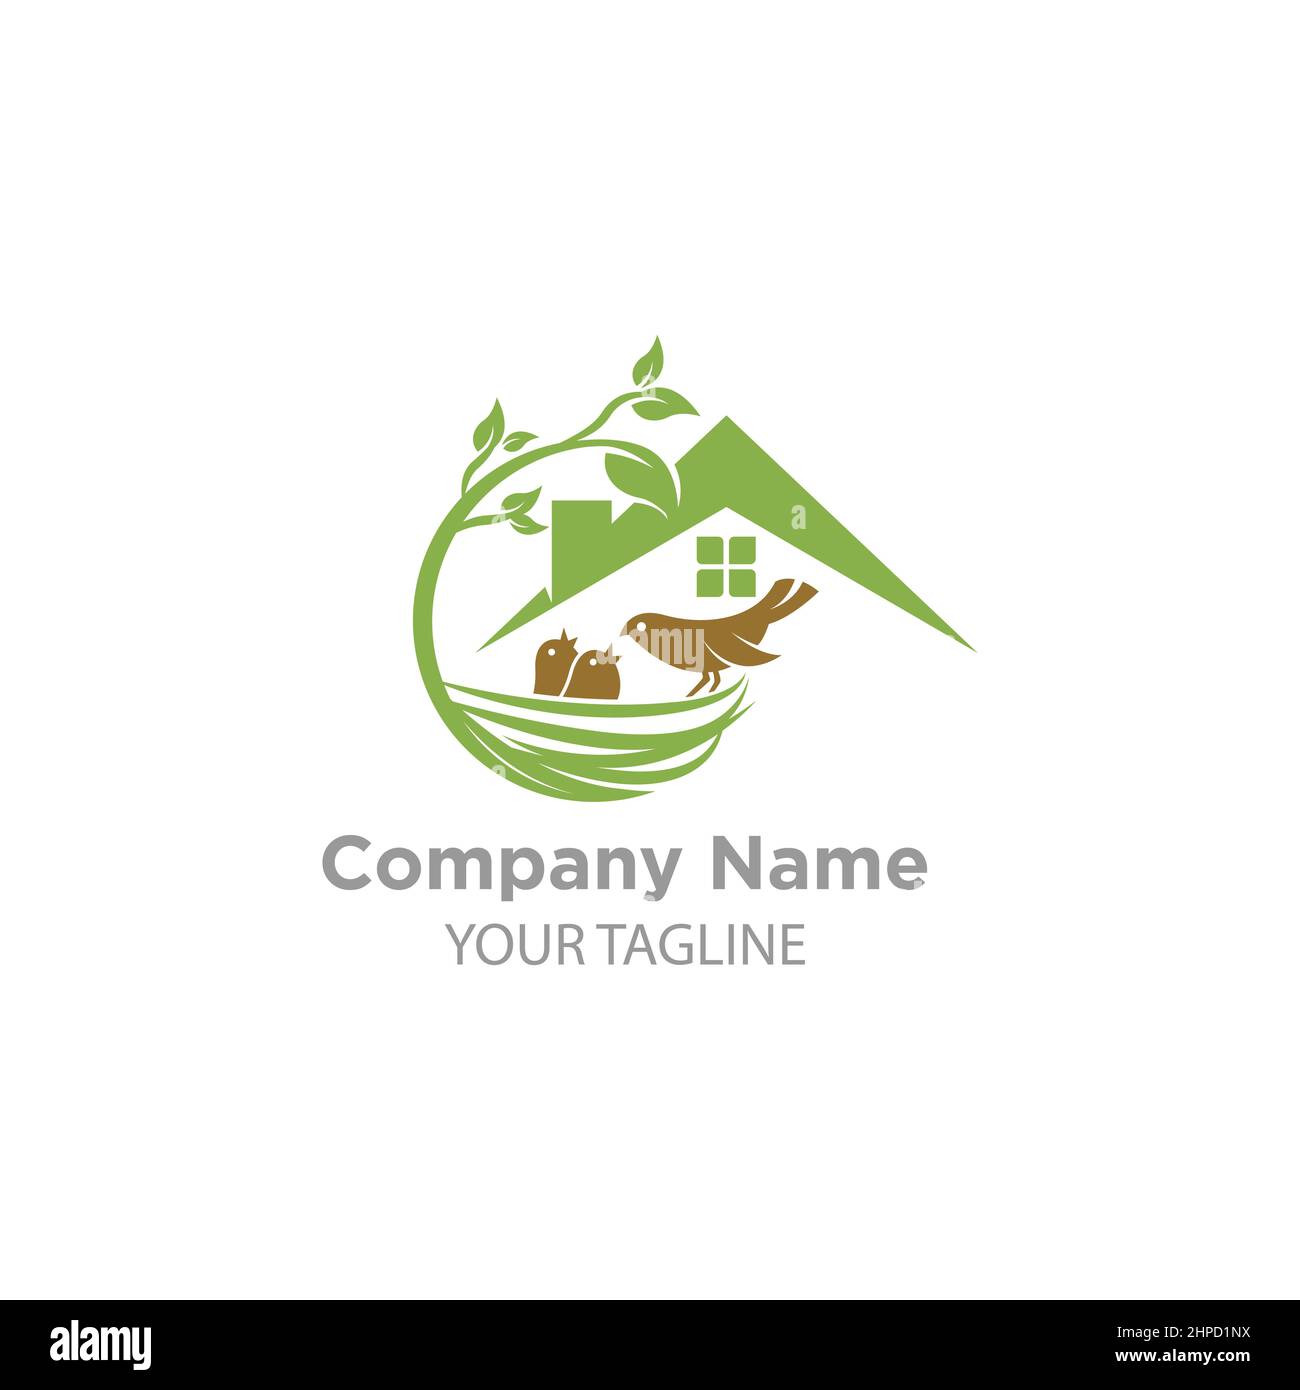 Beauty Nest house logo design template, best for building house logo vector idea.EPS 10 Stock Vector